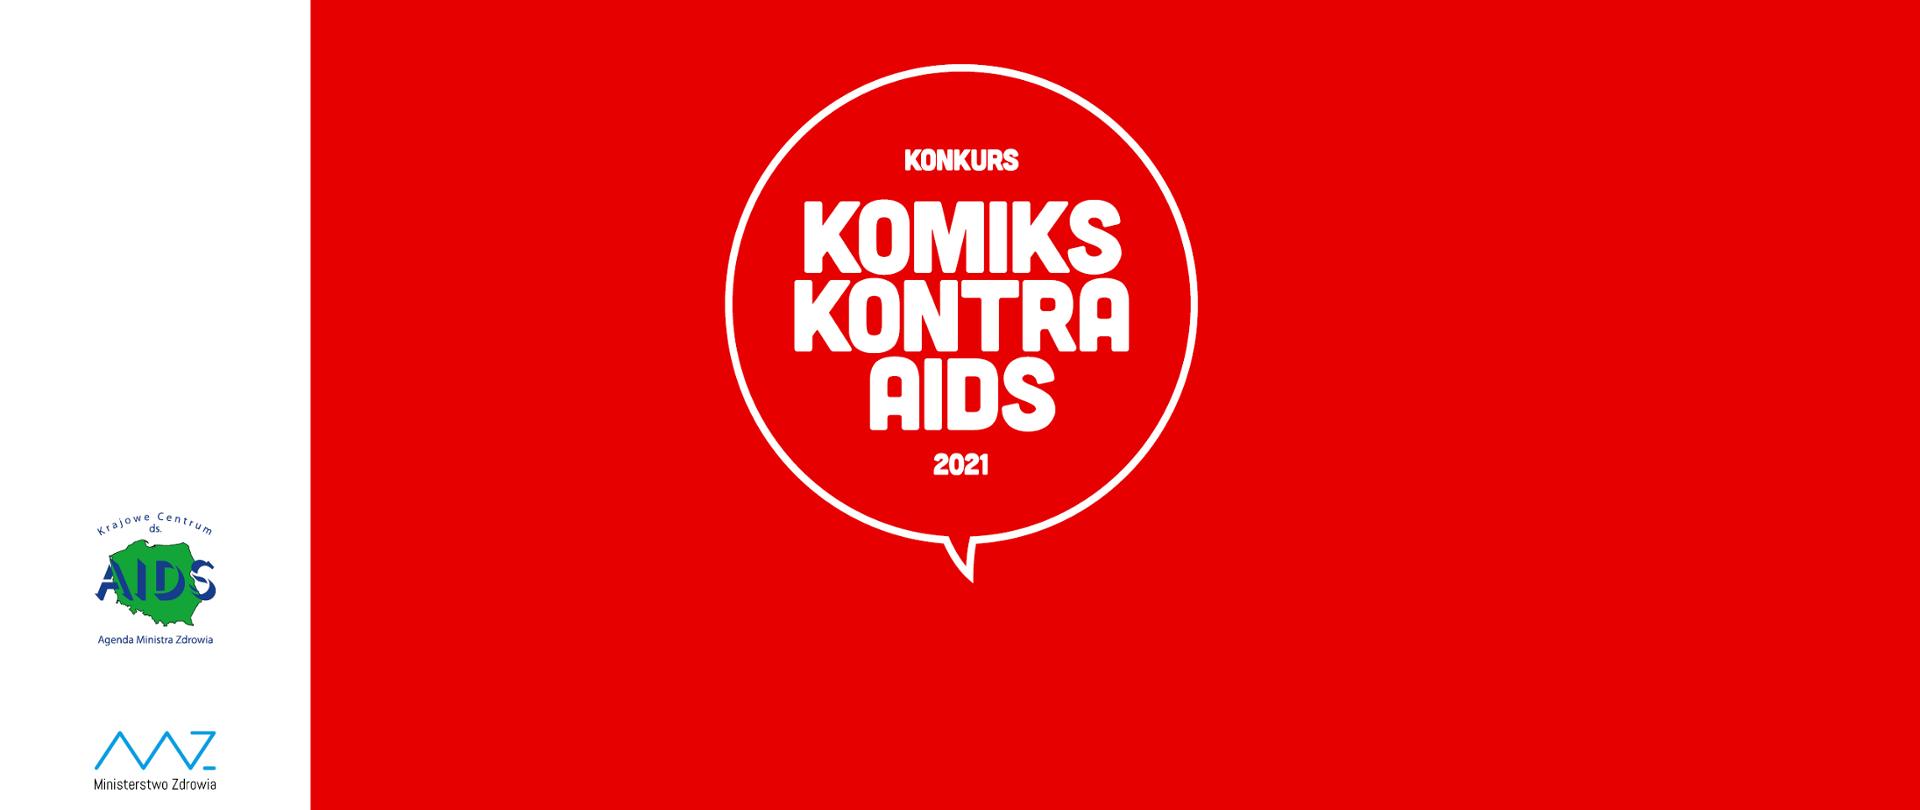 Konkurs Komiks Kontra AIDS 2021